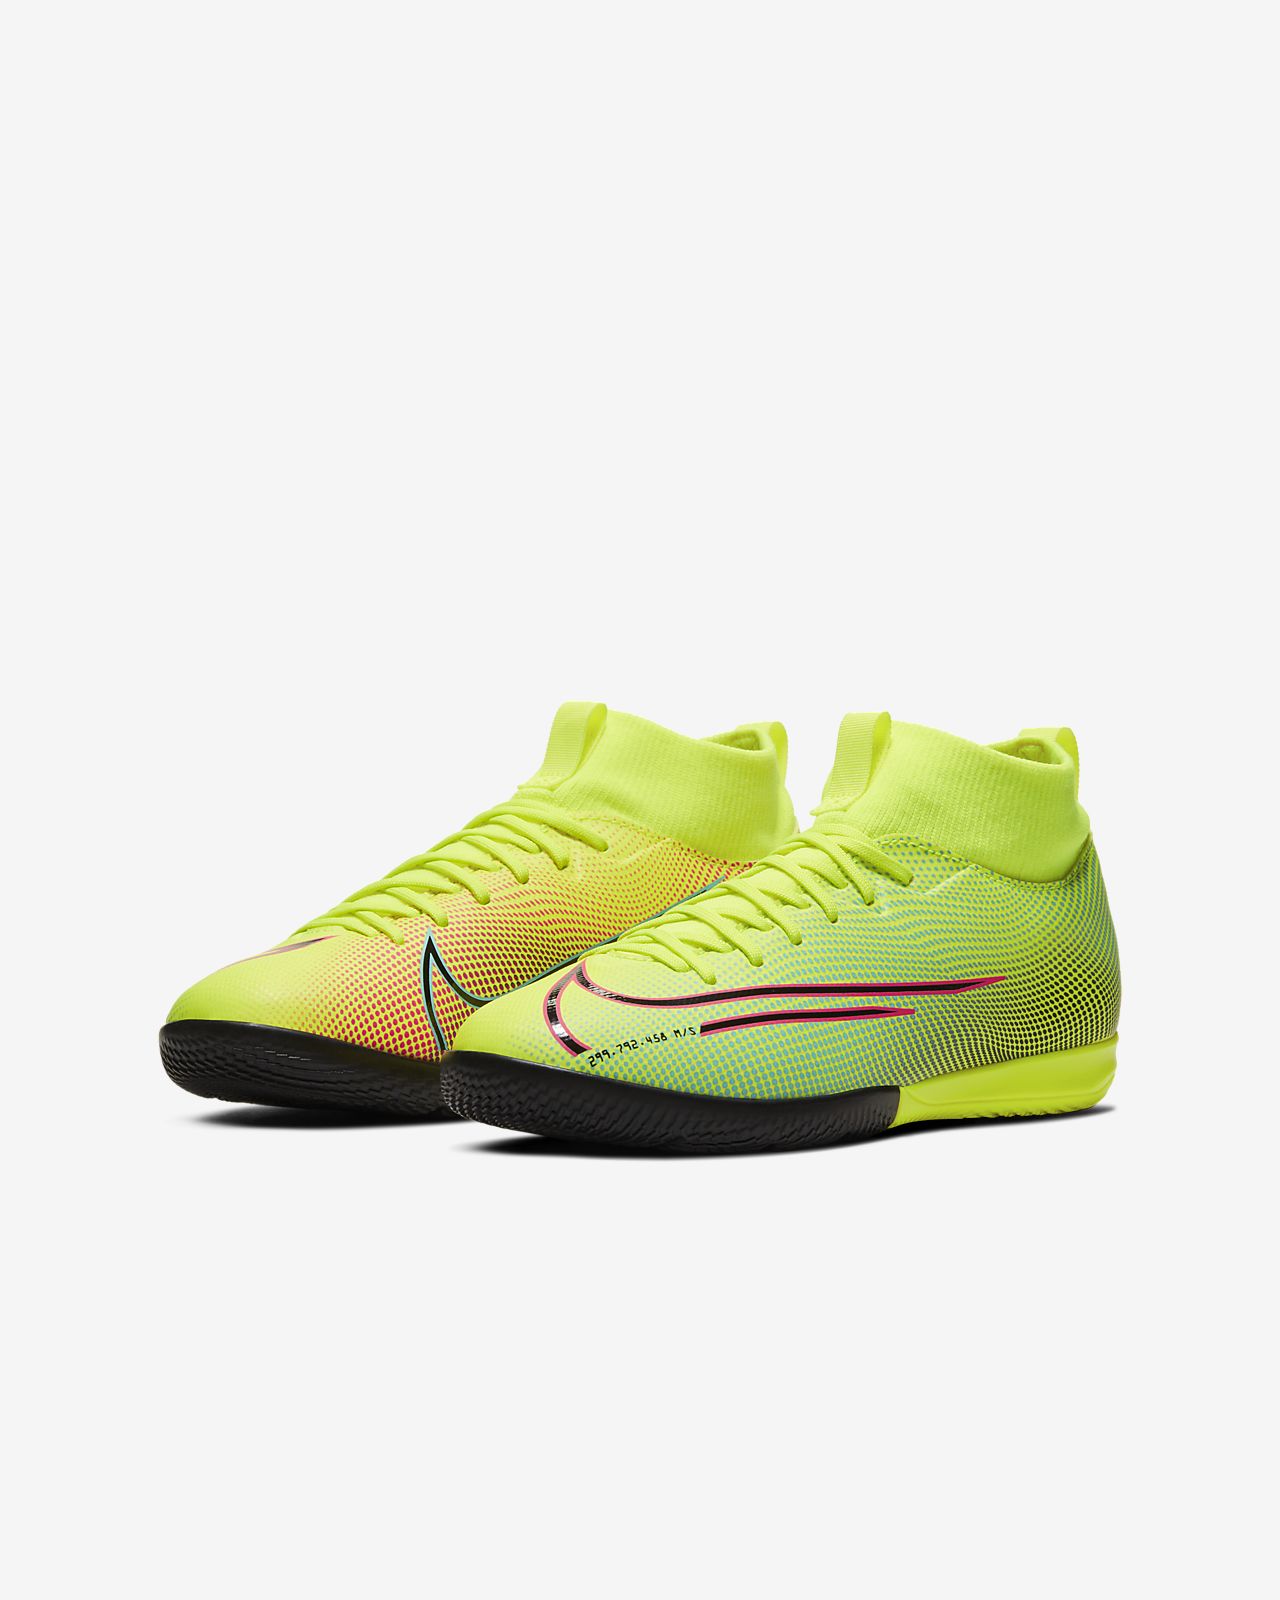 Nike Mercurial Superfly VI Academy IC Yellow Goalinn